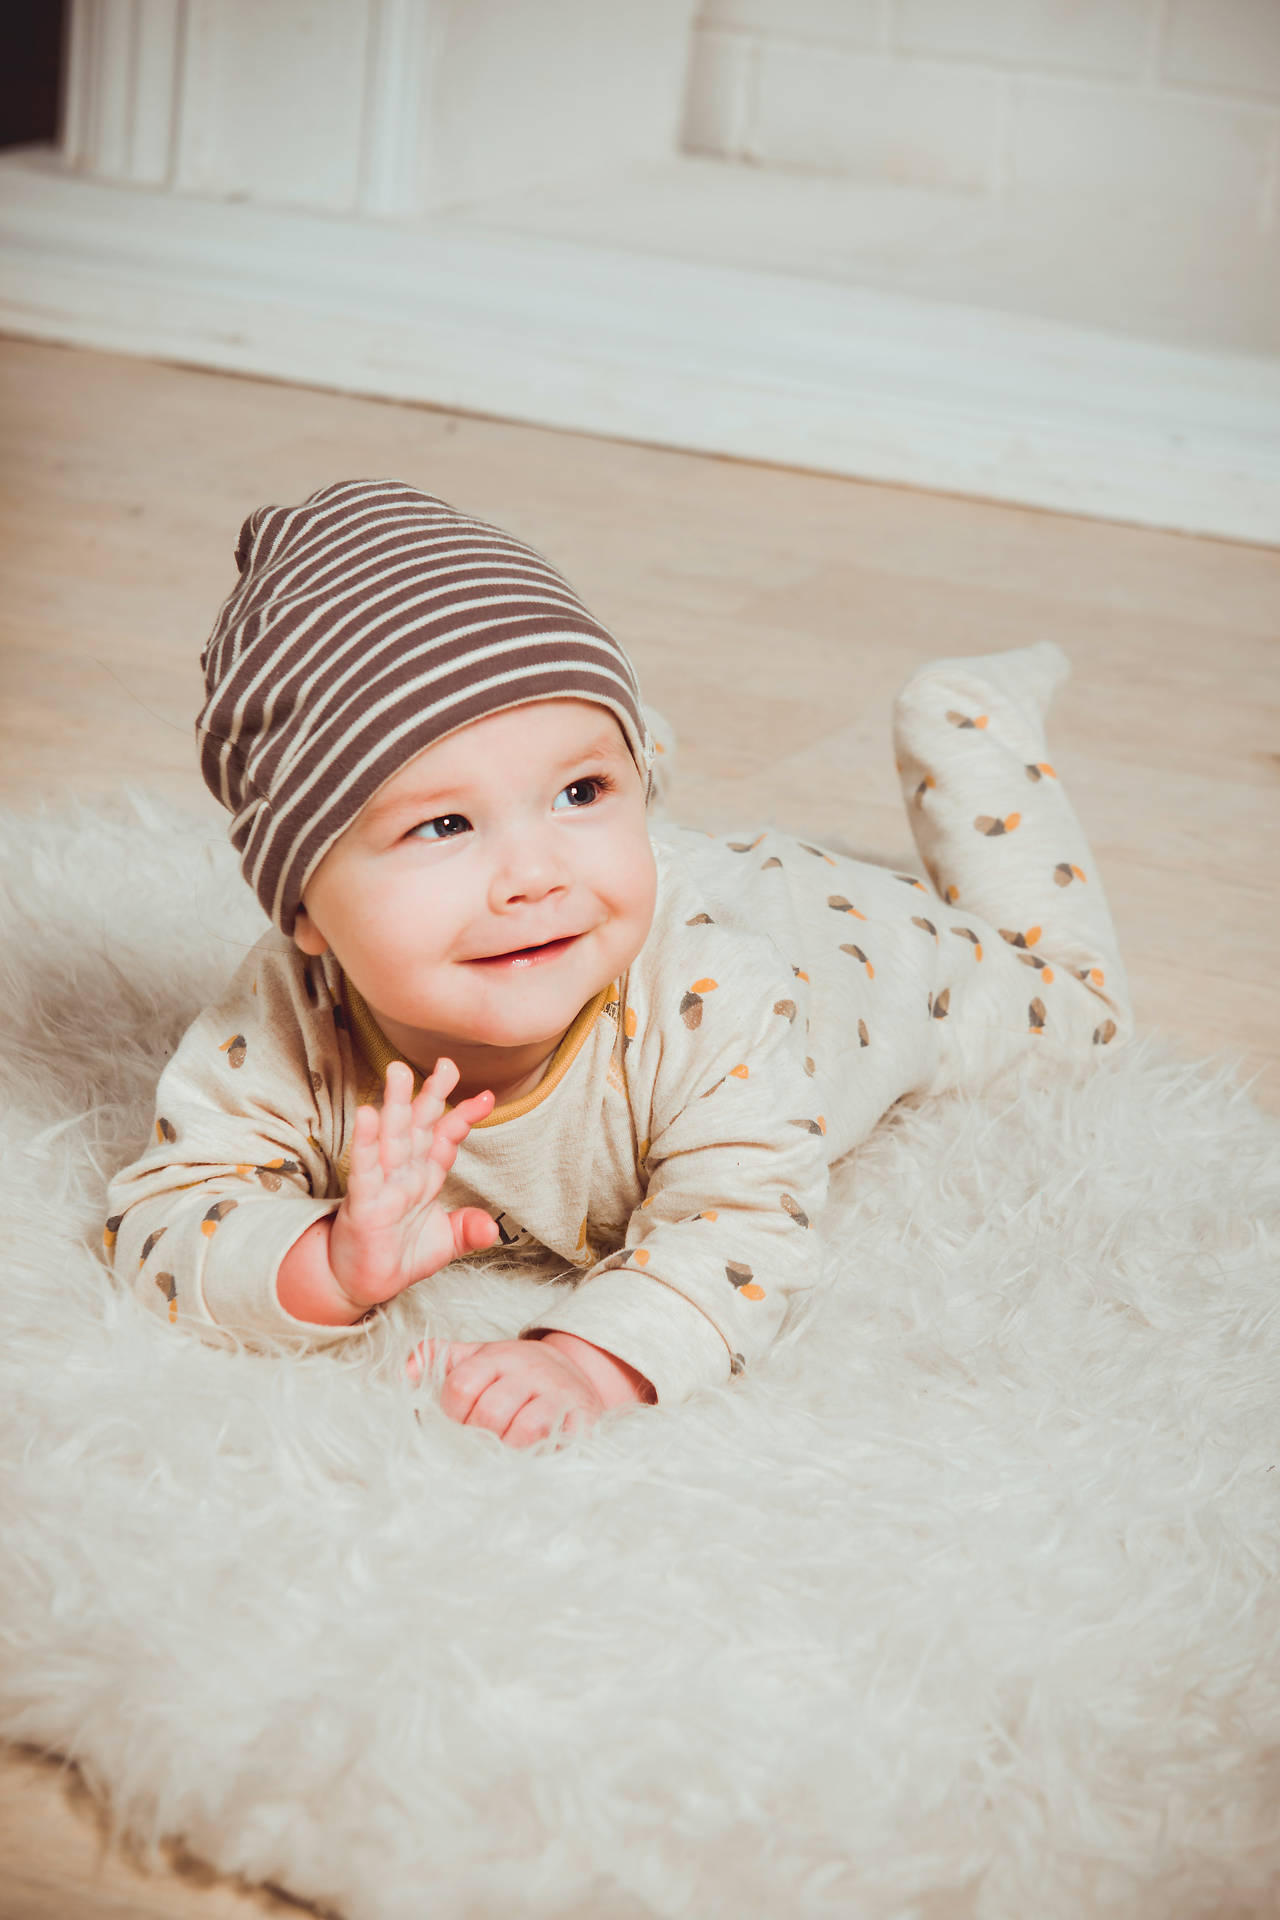 Cute Baby Boy On White Rug Wallpaper